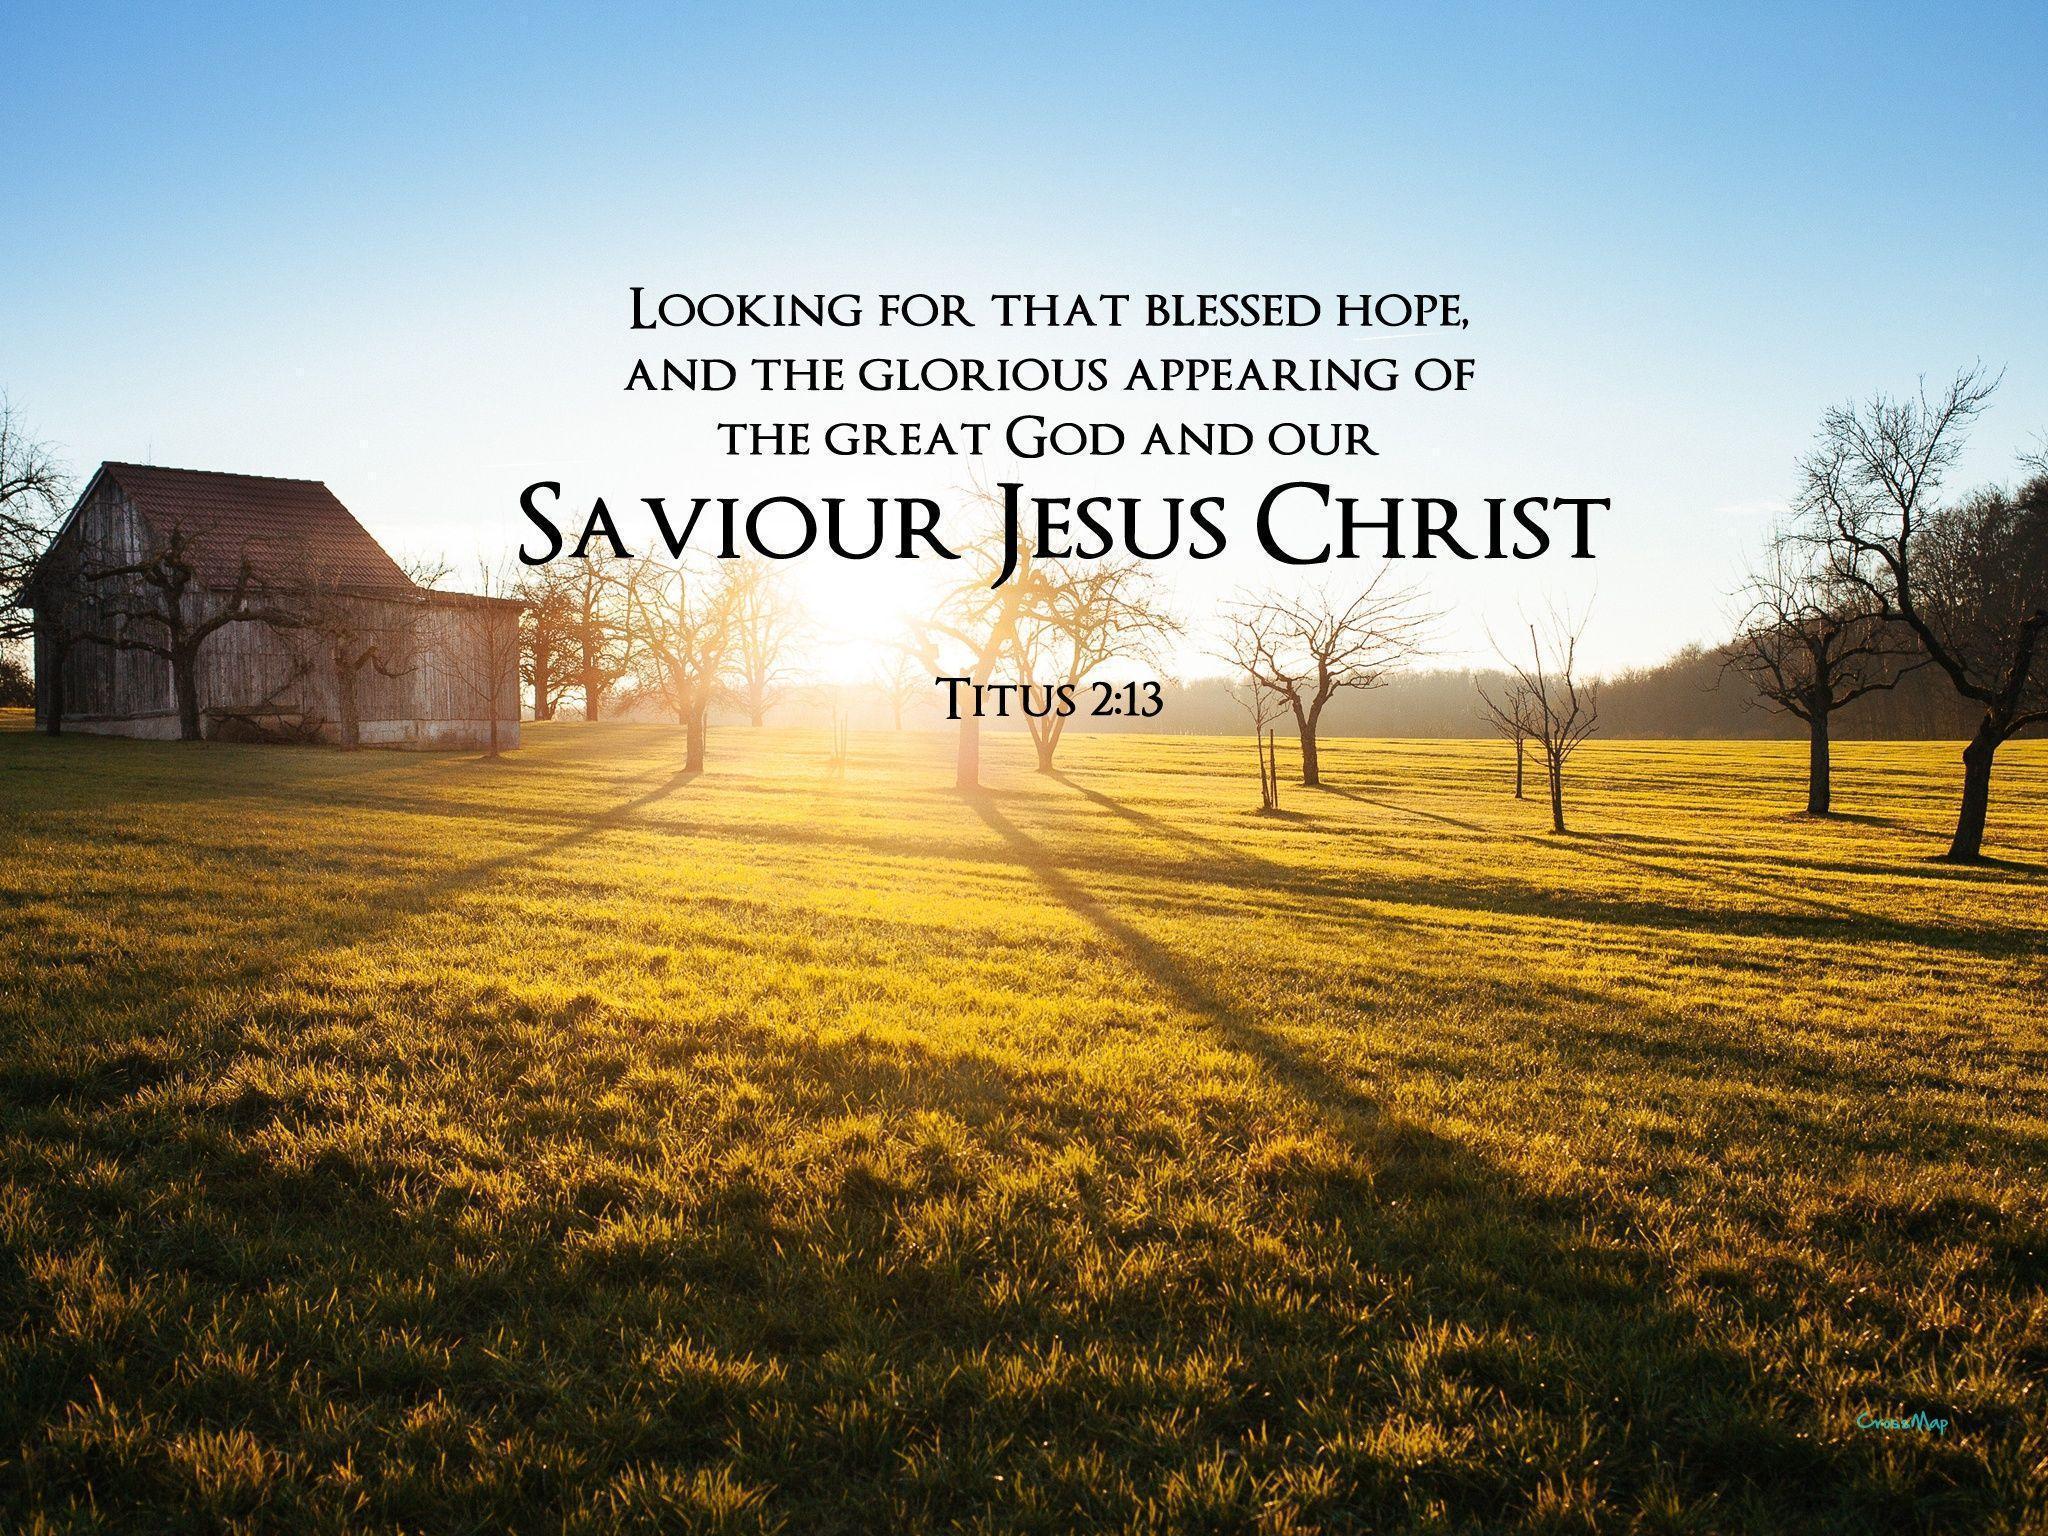 Our Saviour Jesus Christ. Christian Photographs. Crossmap